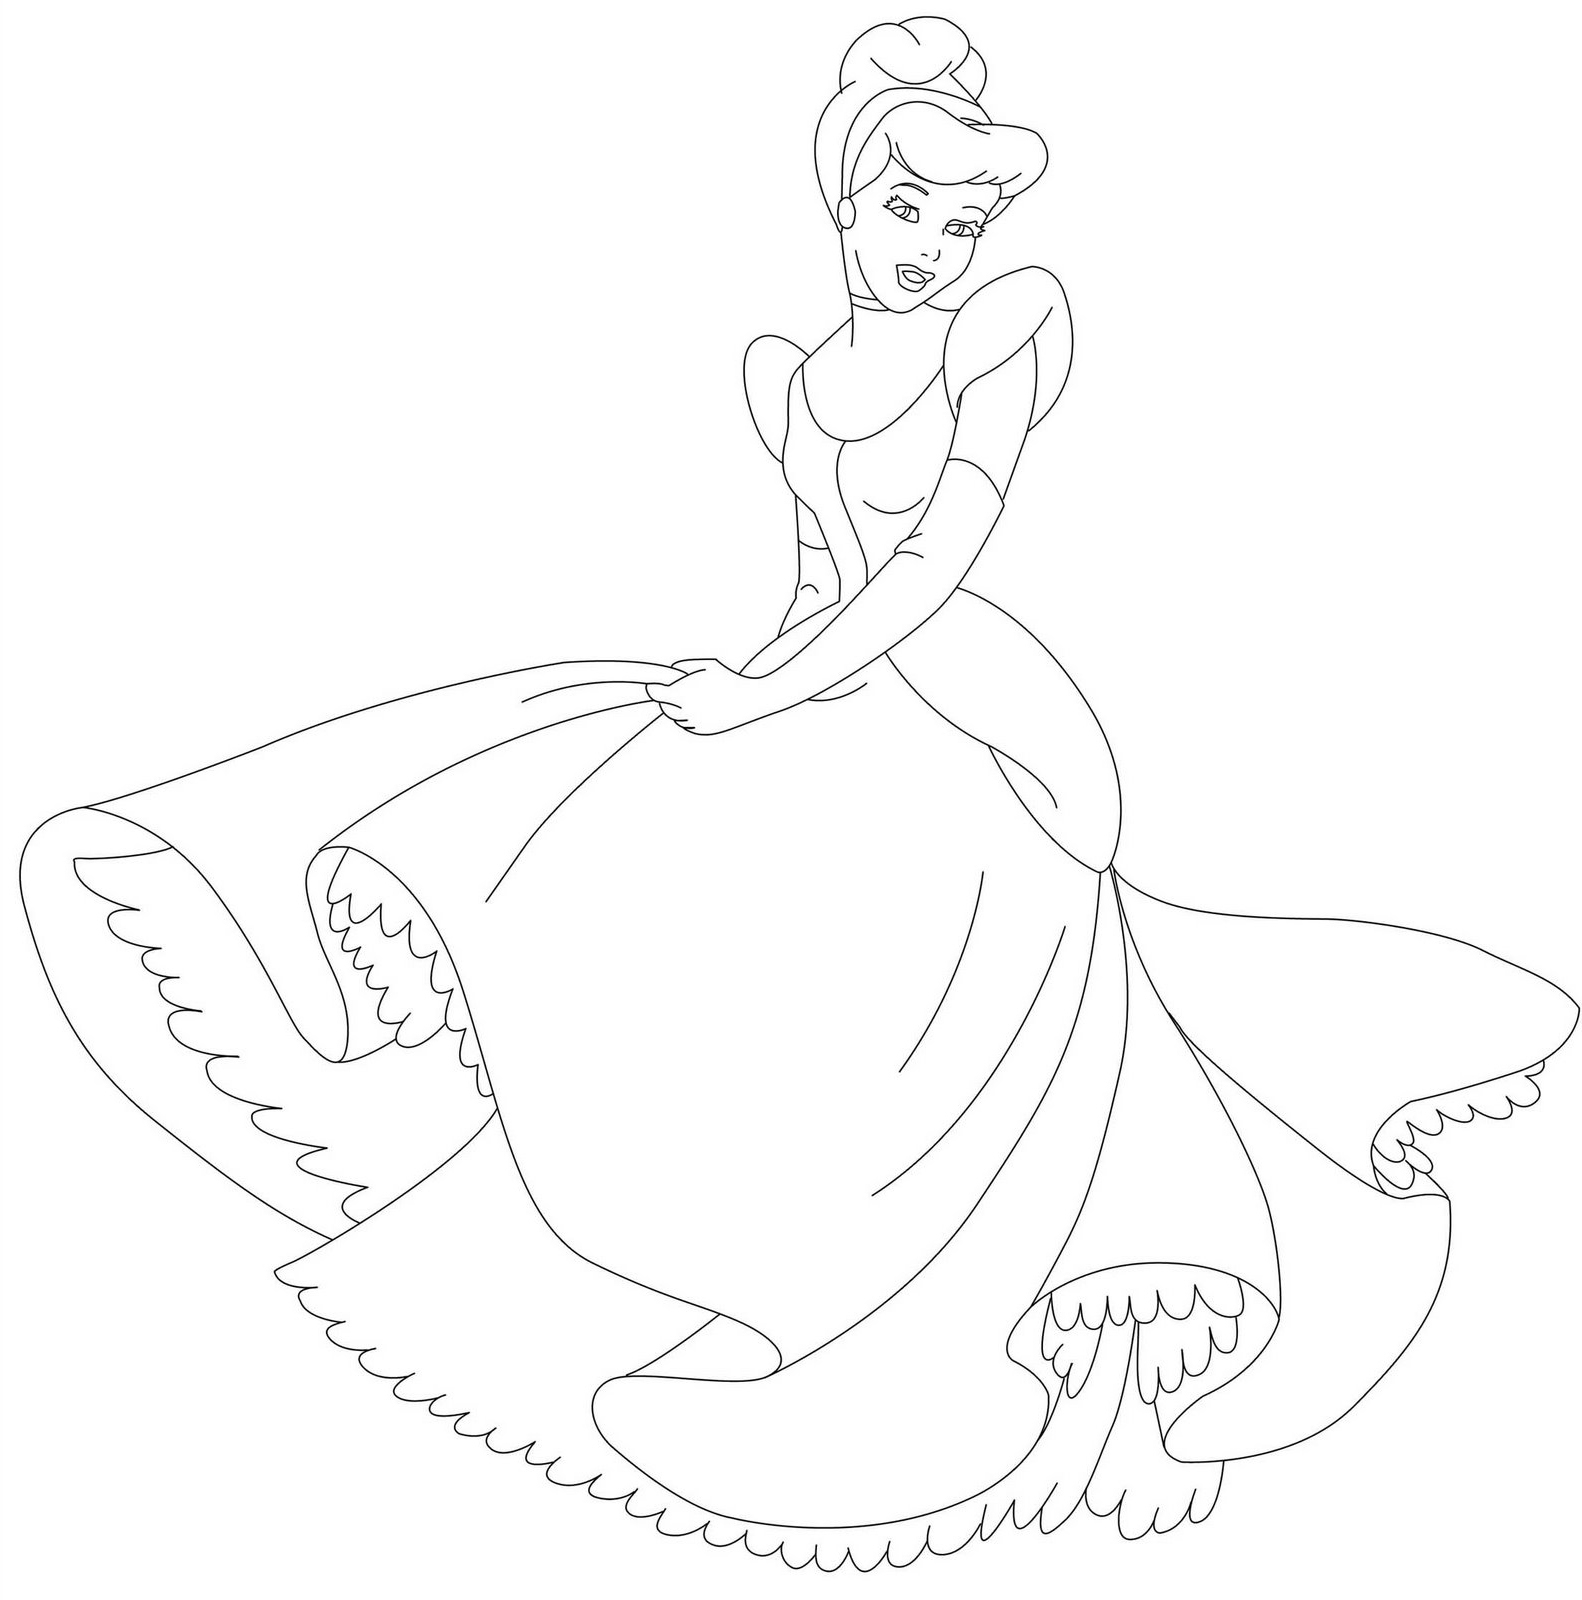 Dibujo para colorear: Princesa (Personajes) #85301 - Dibujos para Colorear e Imprimir Gratis